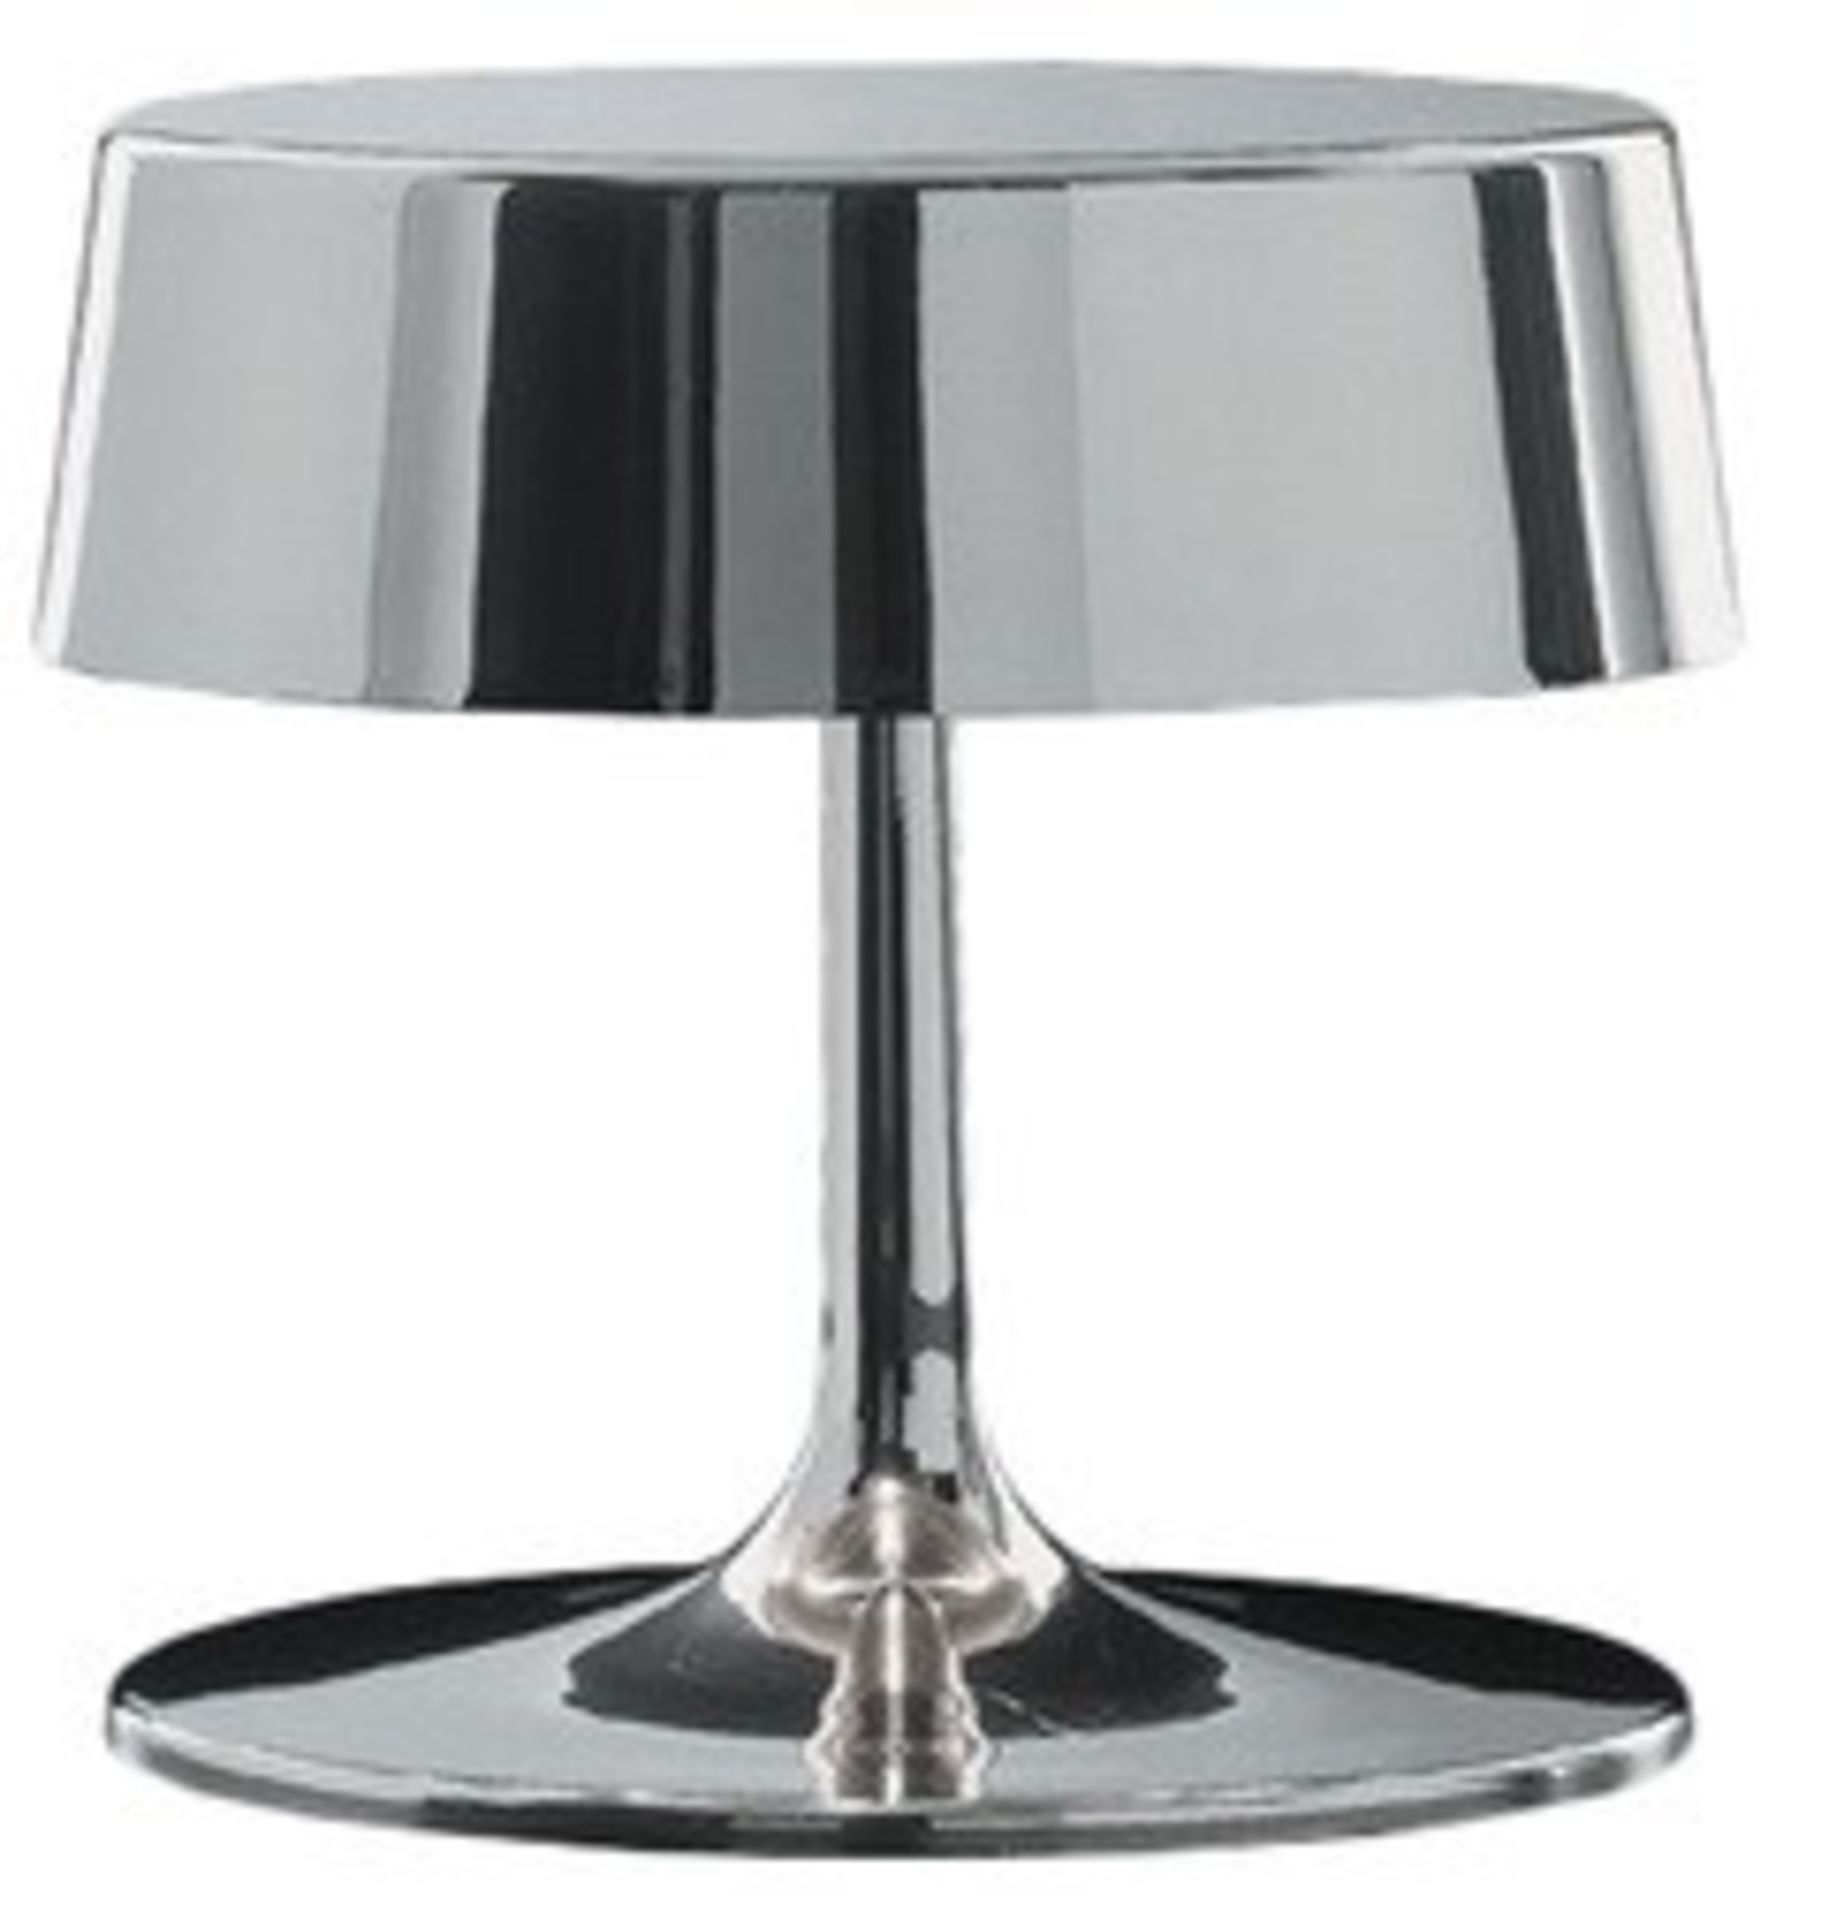 1 x PENTA "China" Medium Table Lamp - Chrome - Ref: 3168959 - CL087 - Location: Altrincham WA14 -